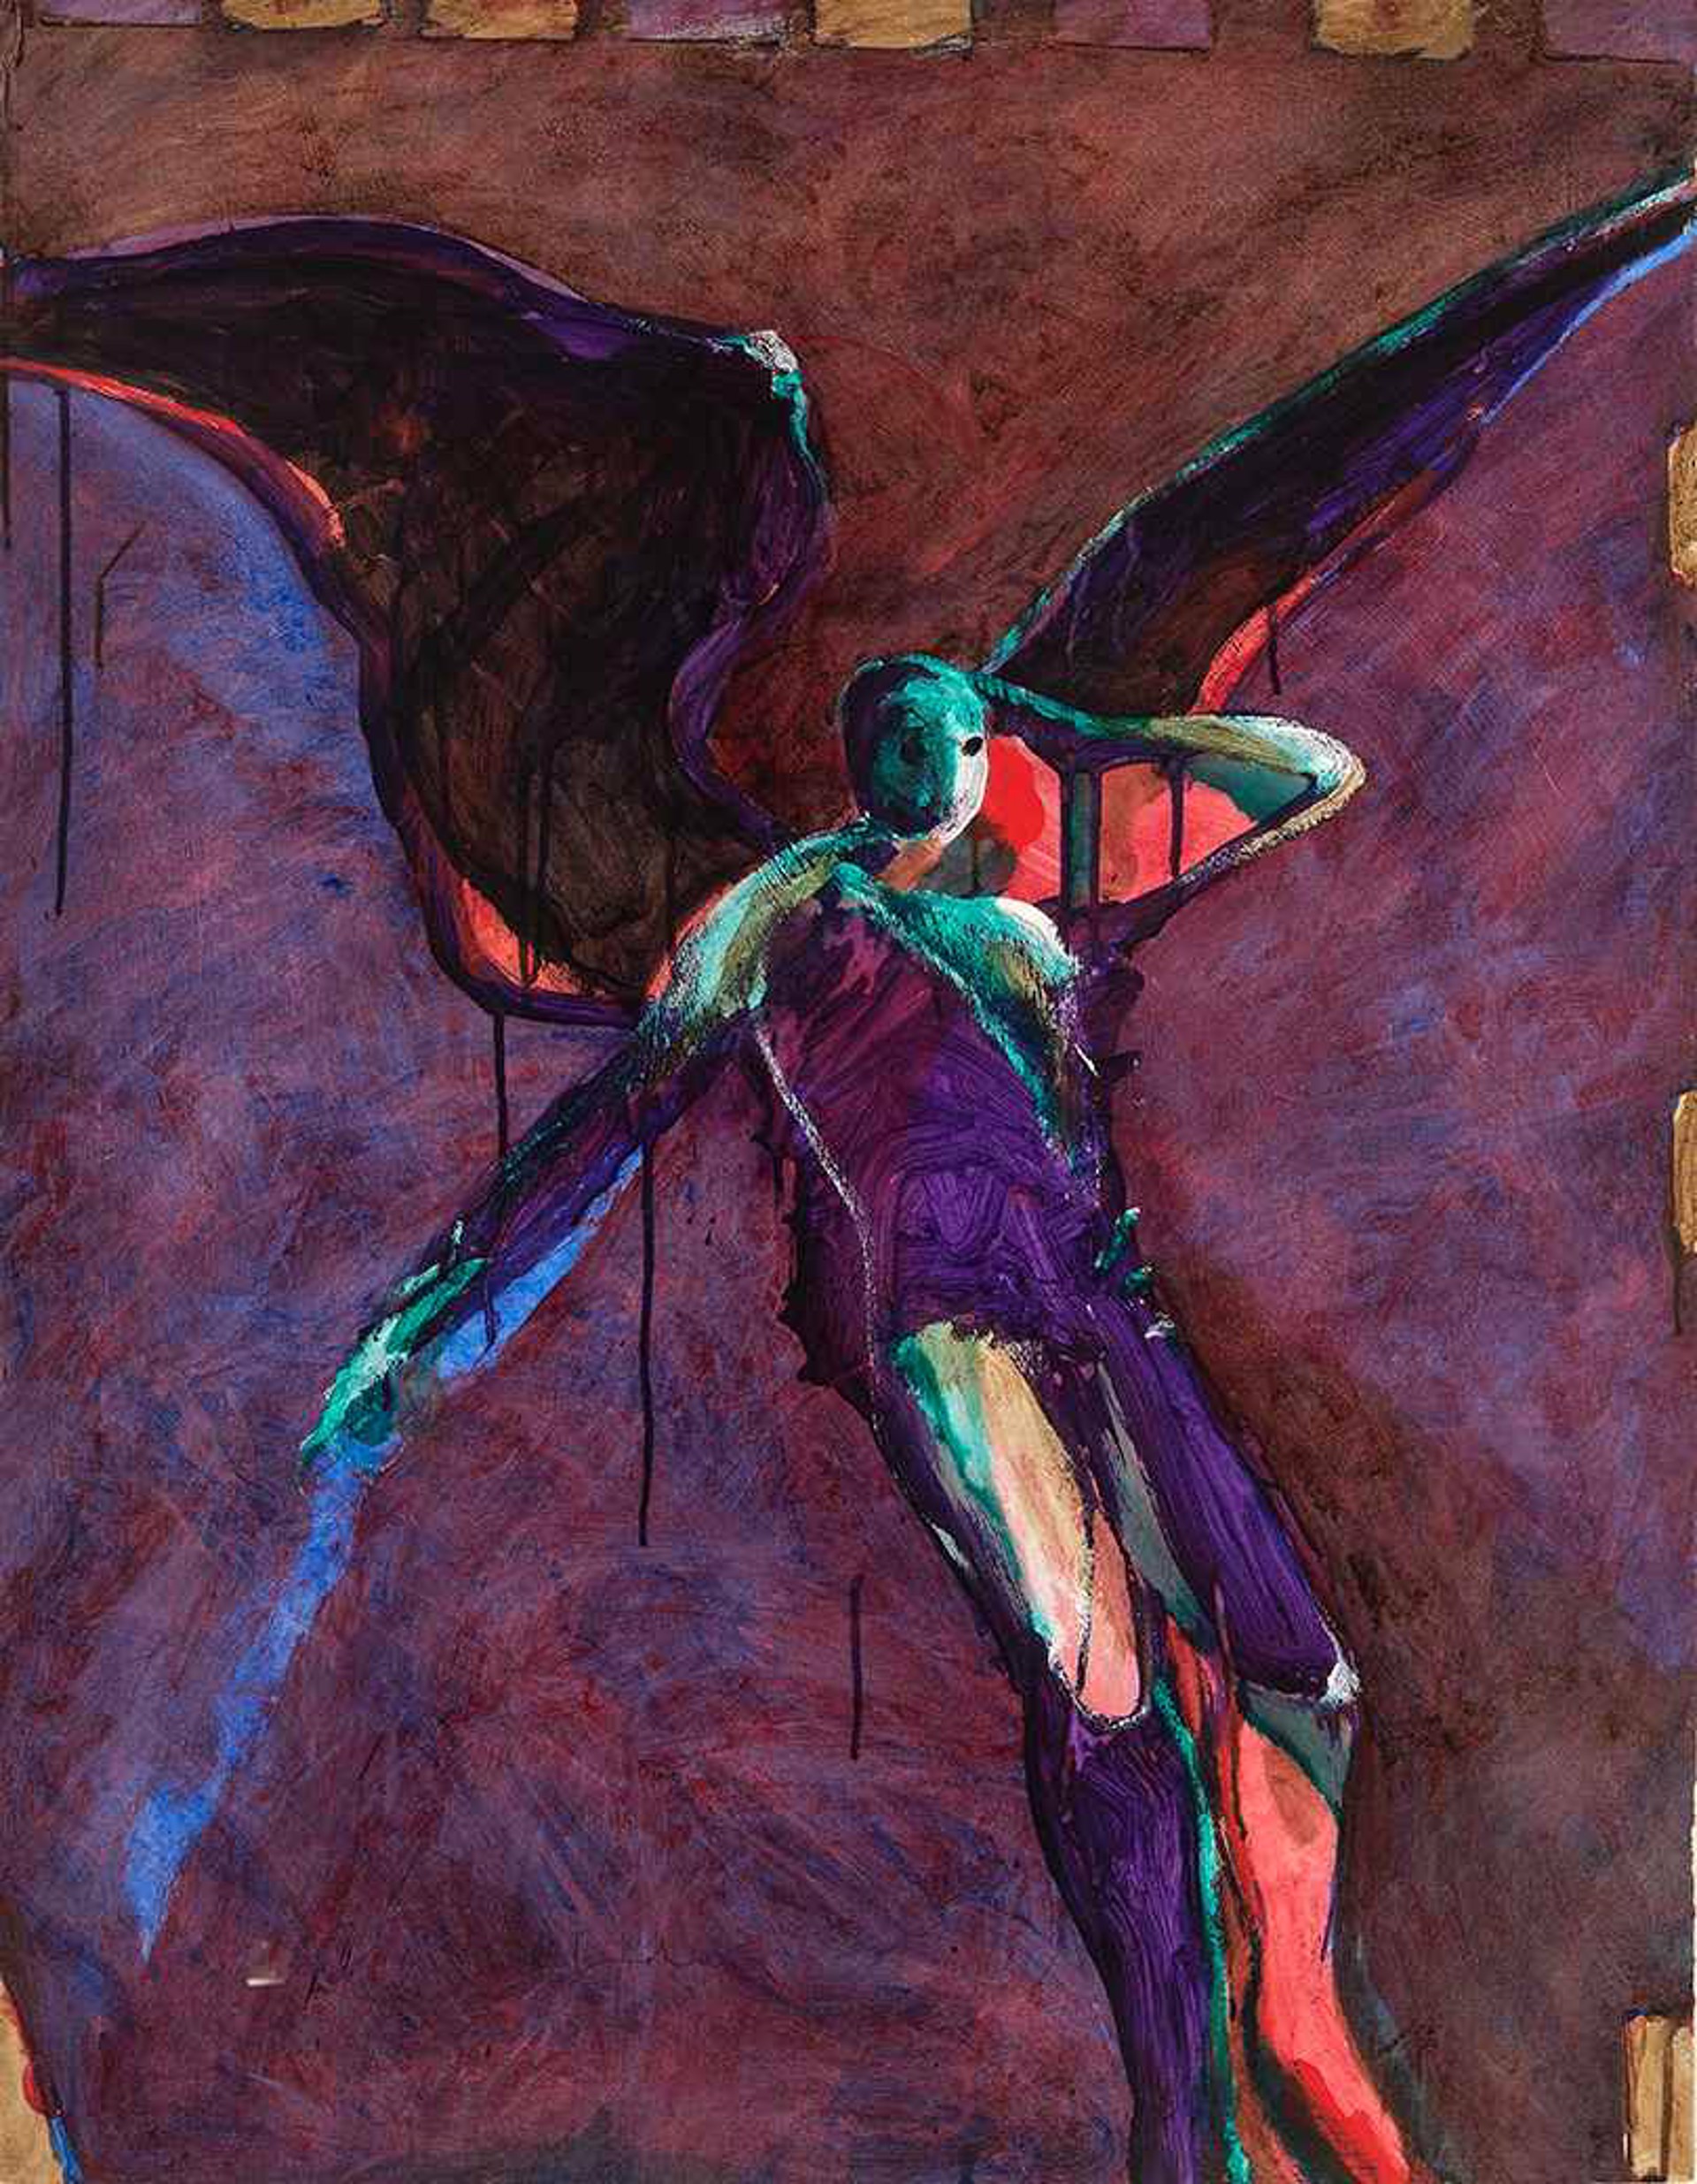 Fallen Angel #3 by Fritz Scholder